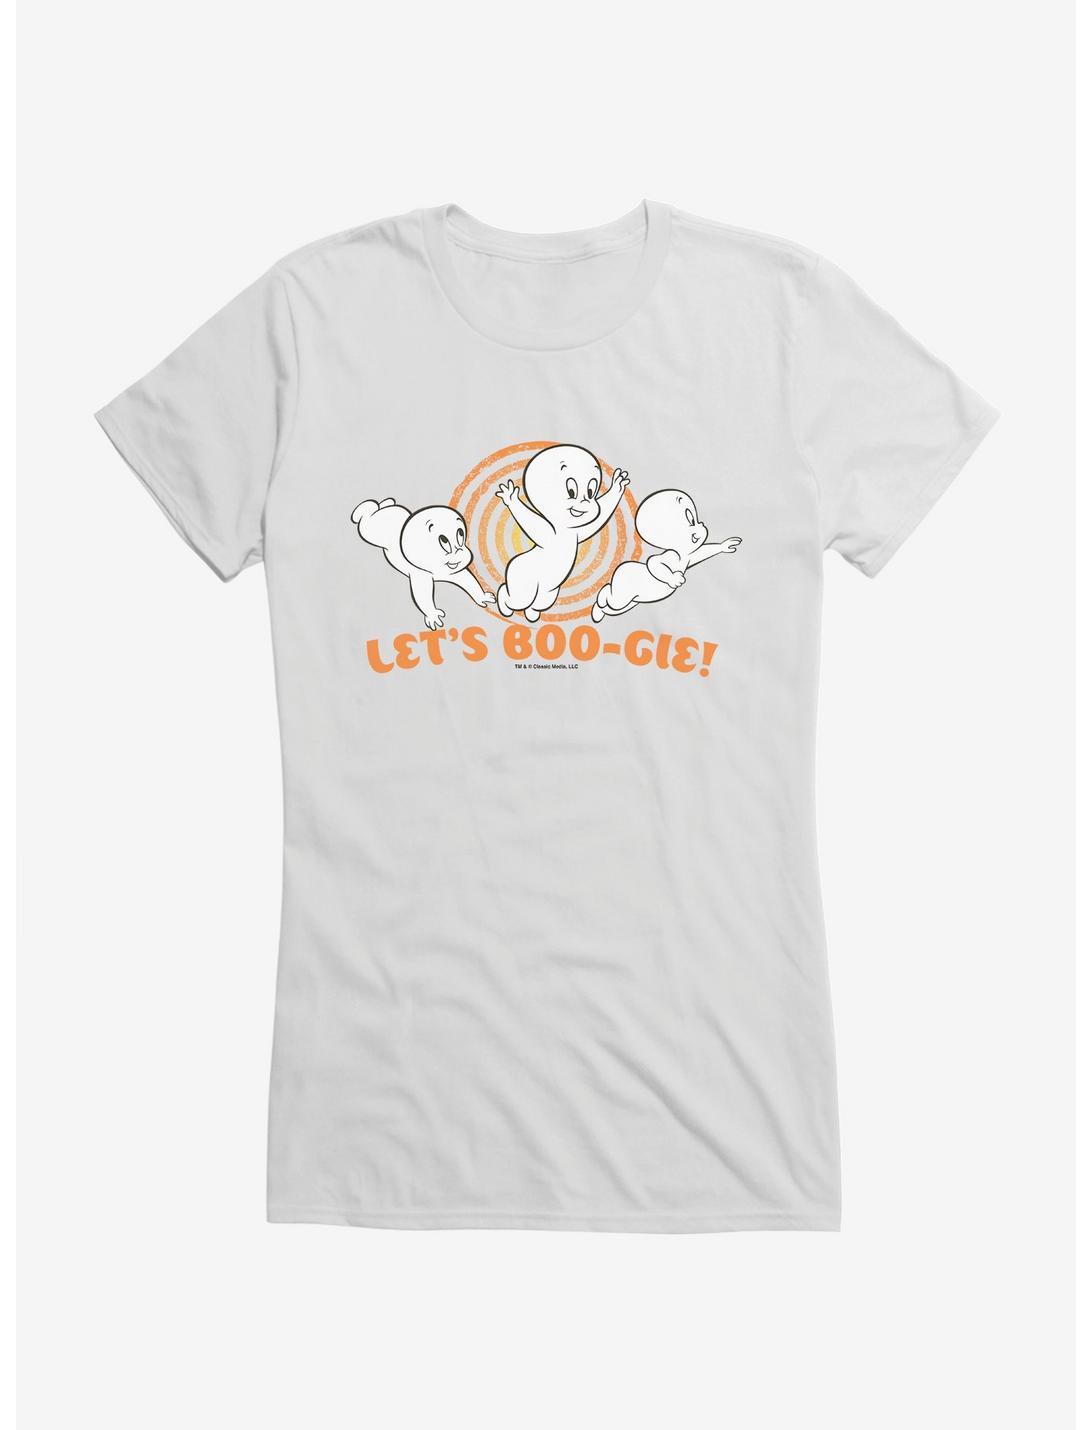 Casper The Friendly Ghost Boo-gie Girls T-Shirt, , hi-res